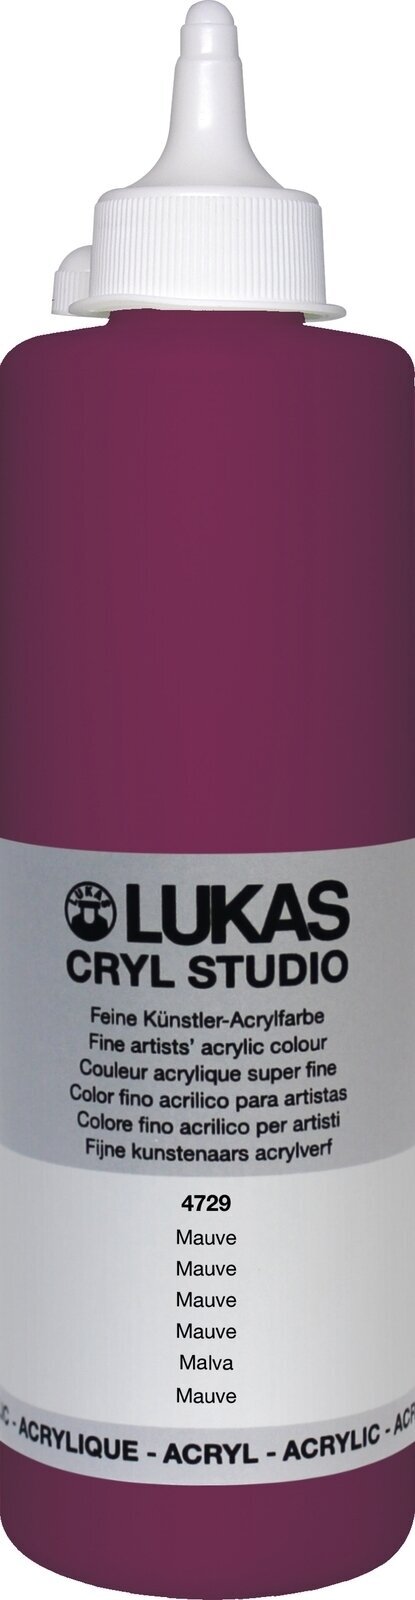 Tinta acrílica Lukas Cryl Studio Tinta acrílica 500 ml Mauve